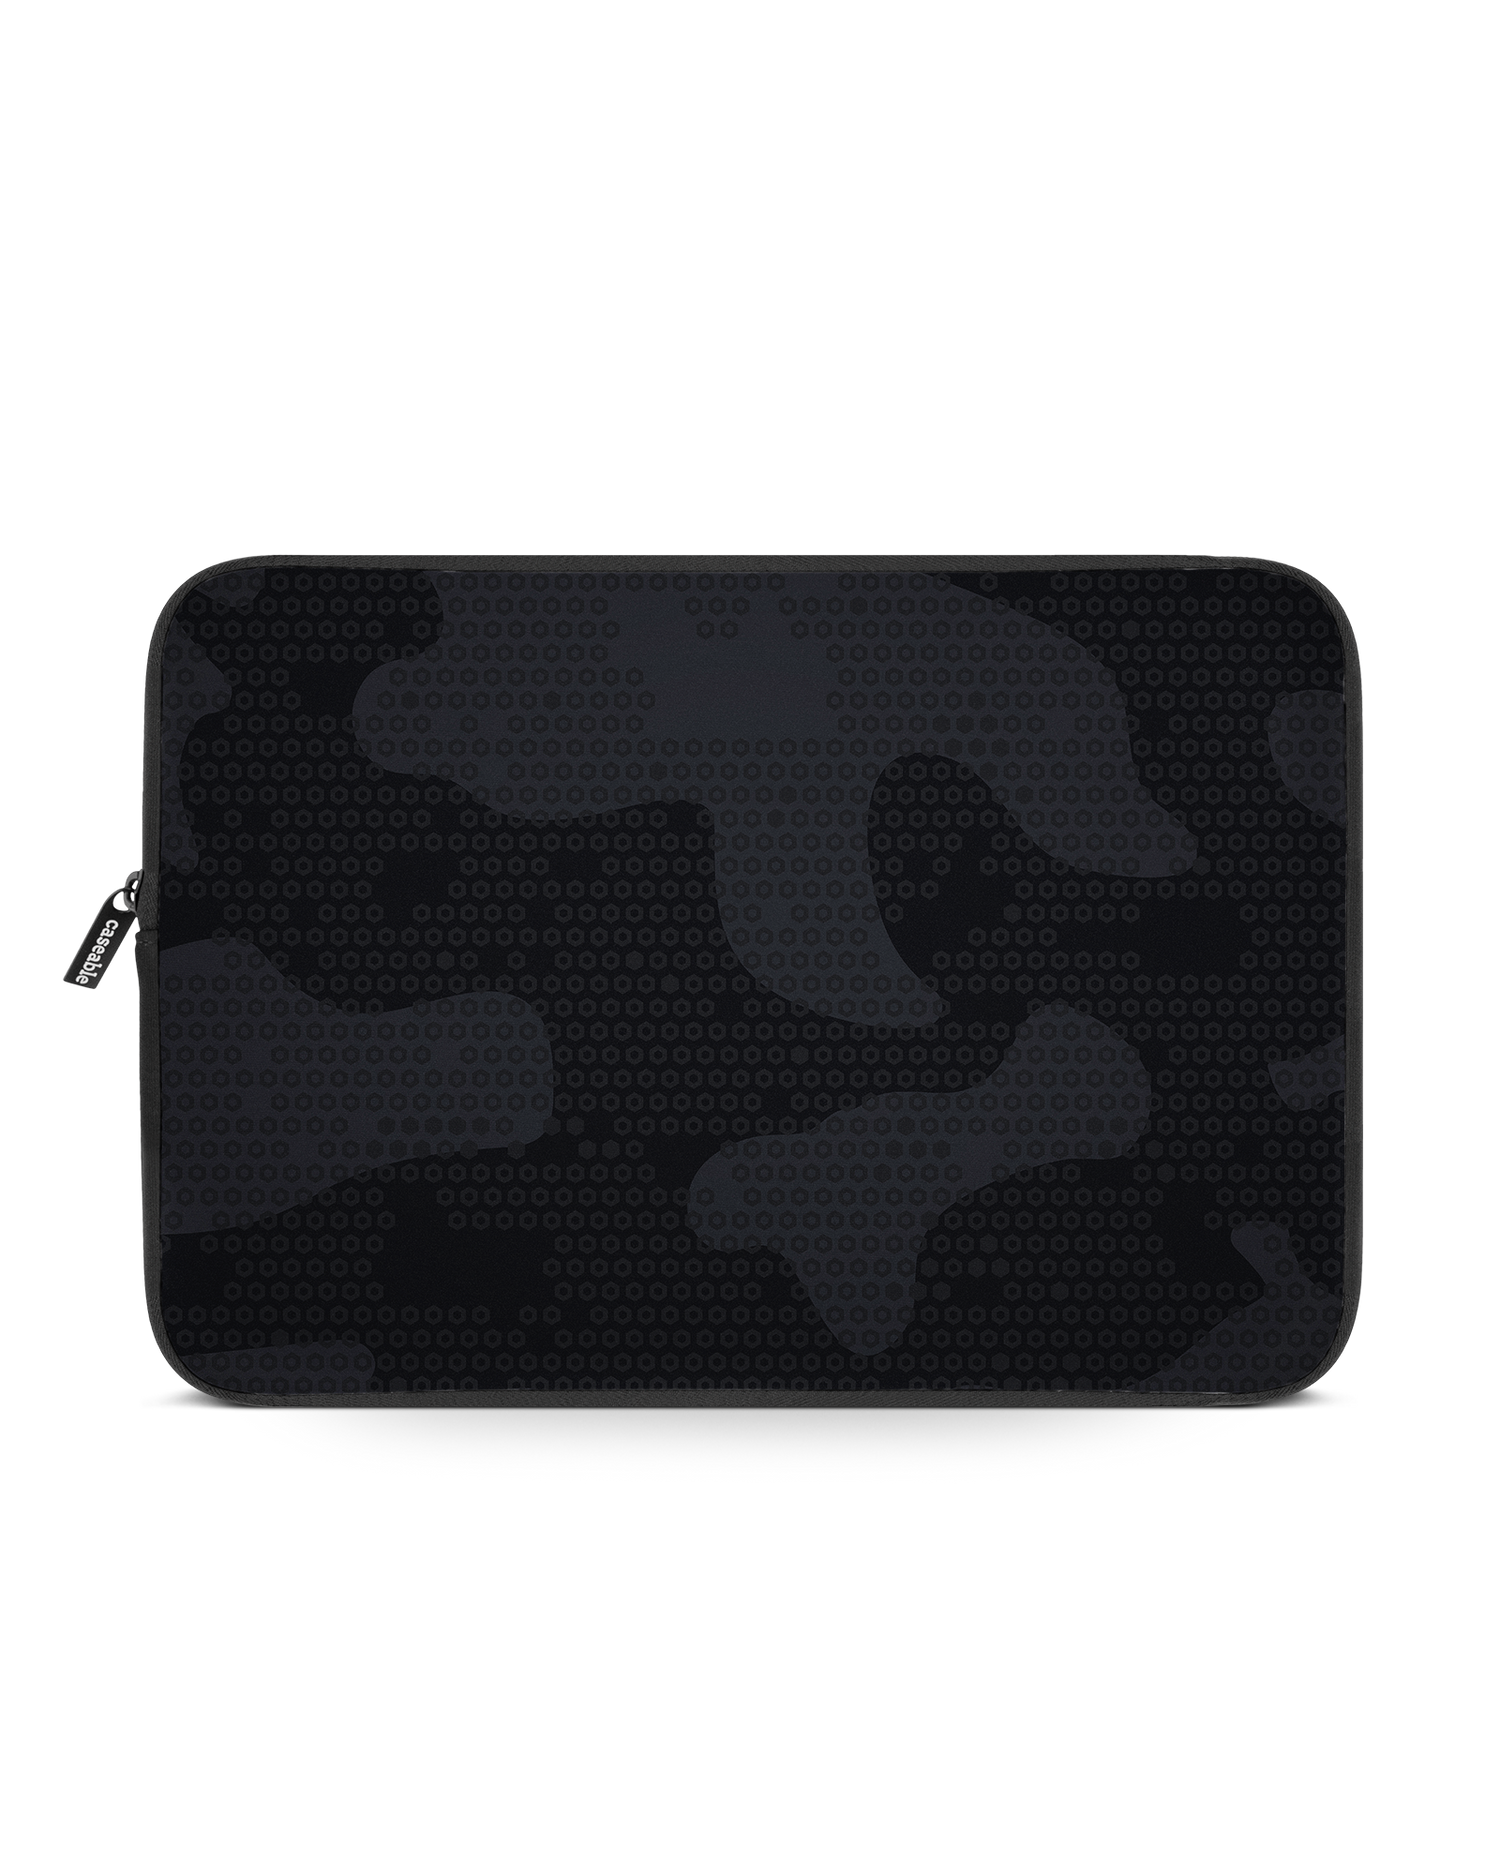 Spec Ops Dark Laptop Case 14 inch: Front View